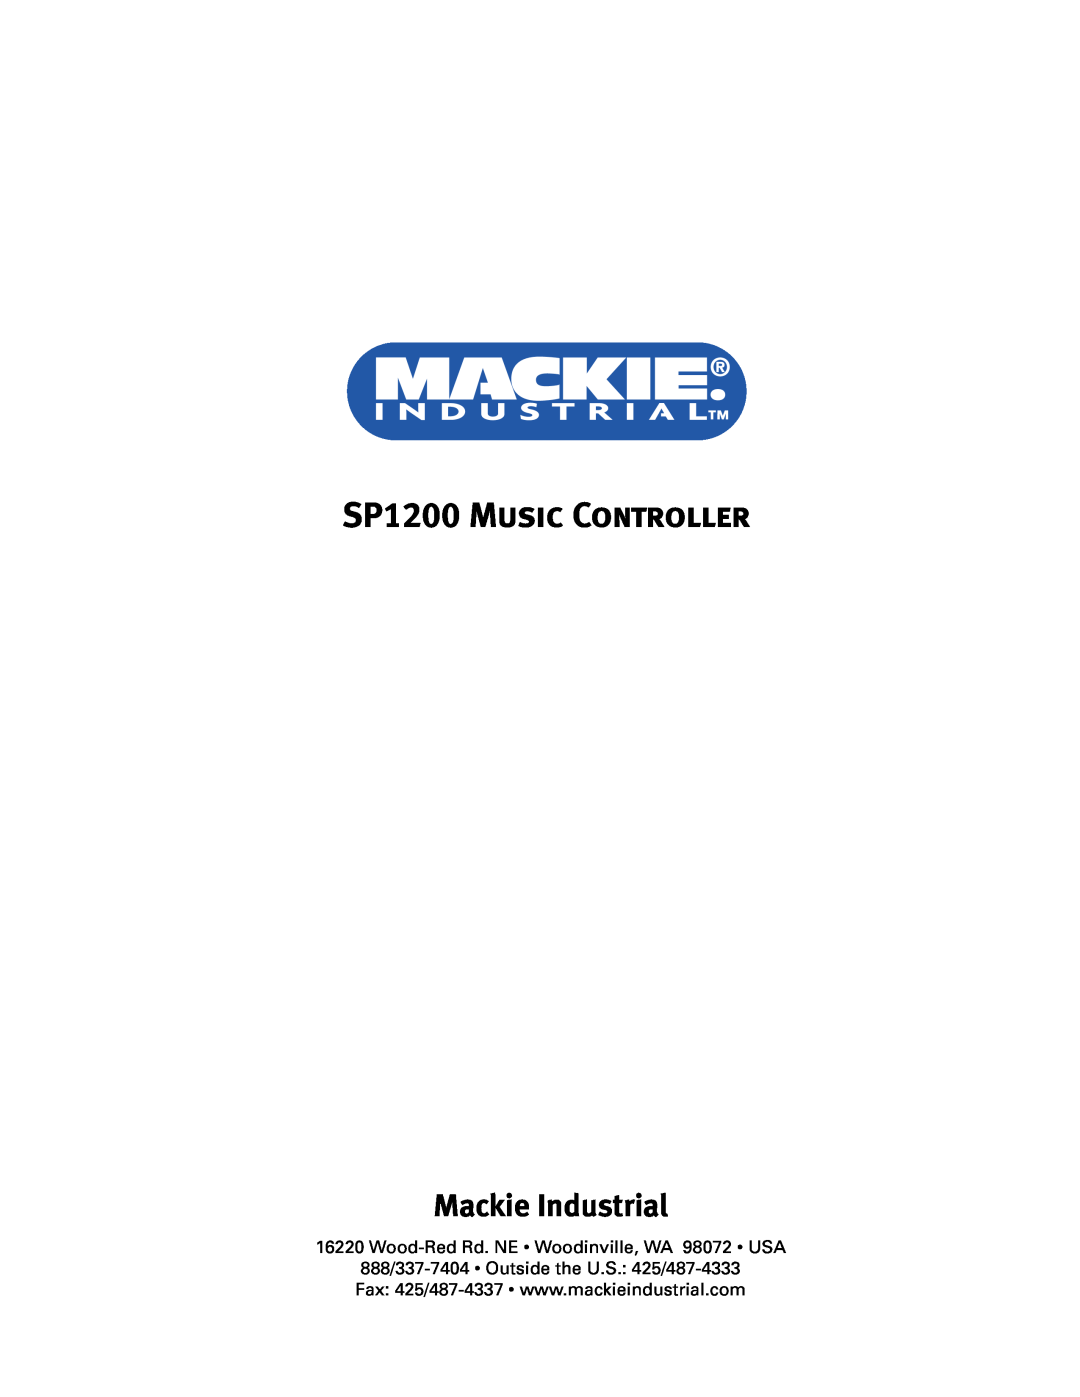 Mackie user service Mackie Industrial, SP1200 Music Controller 